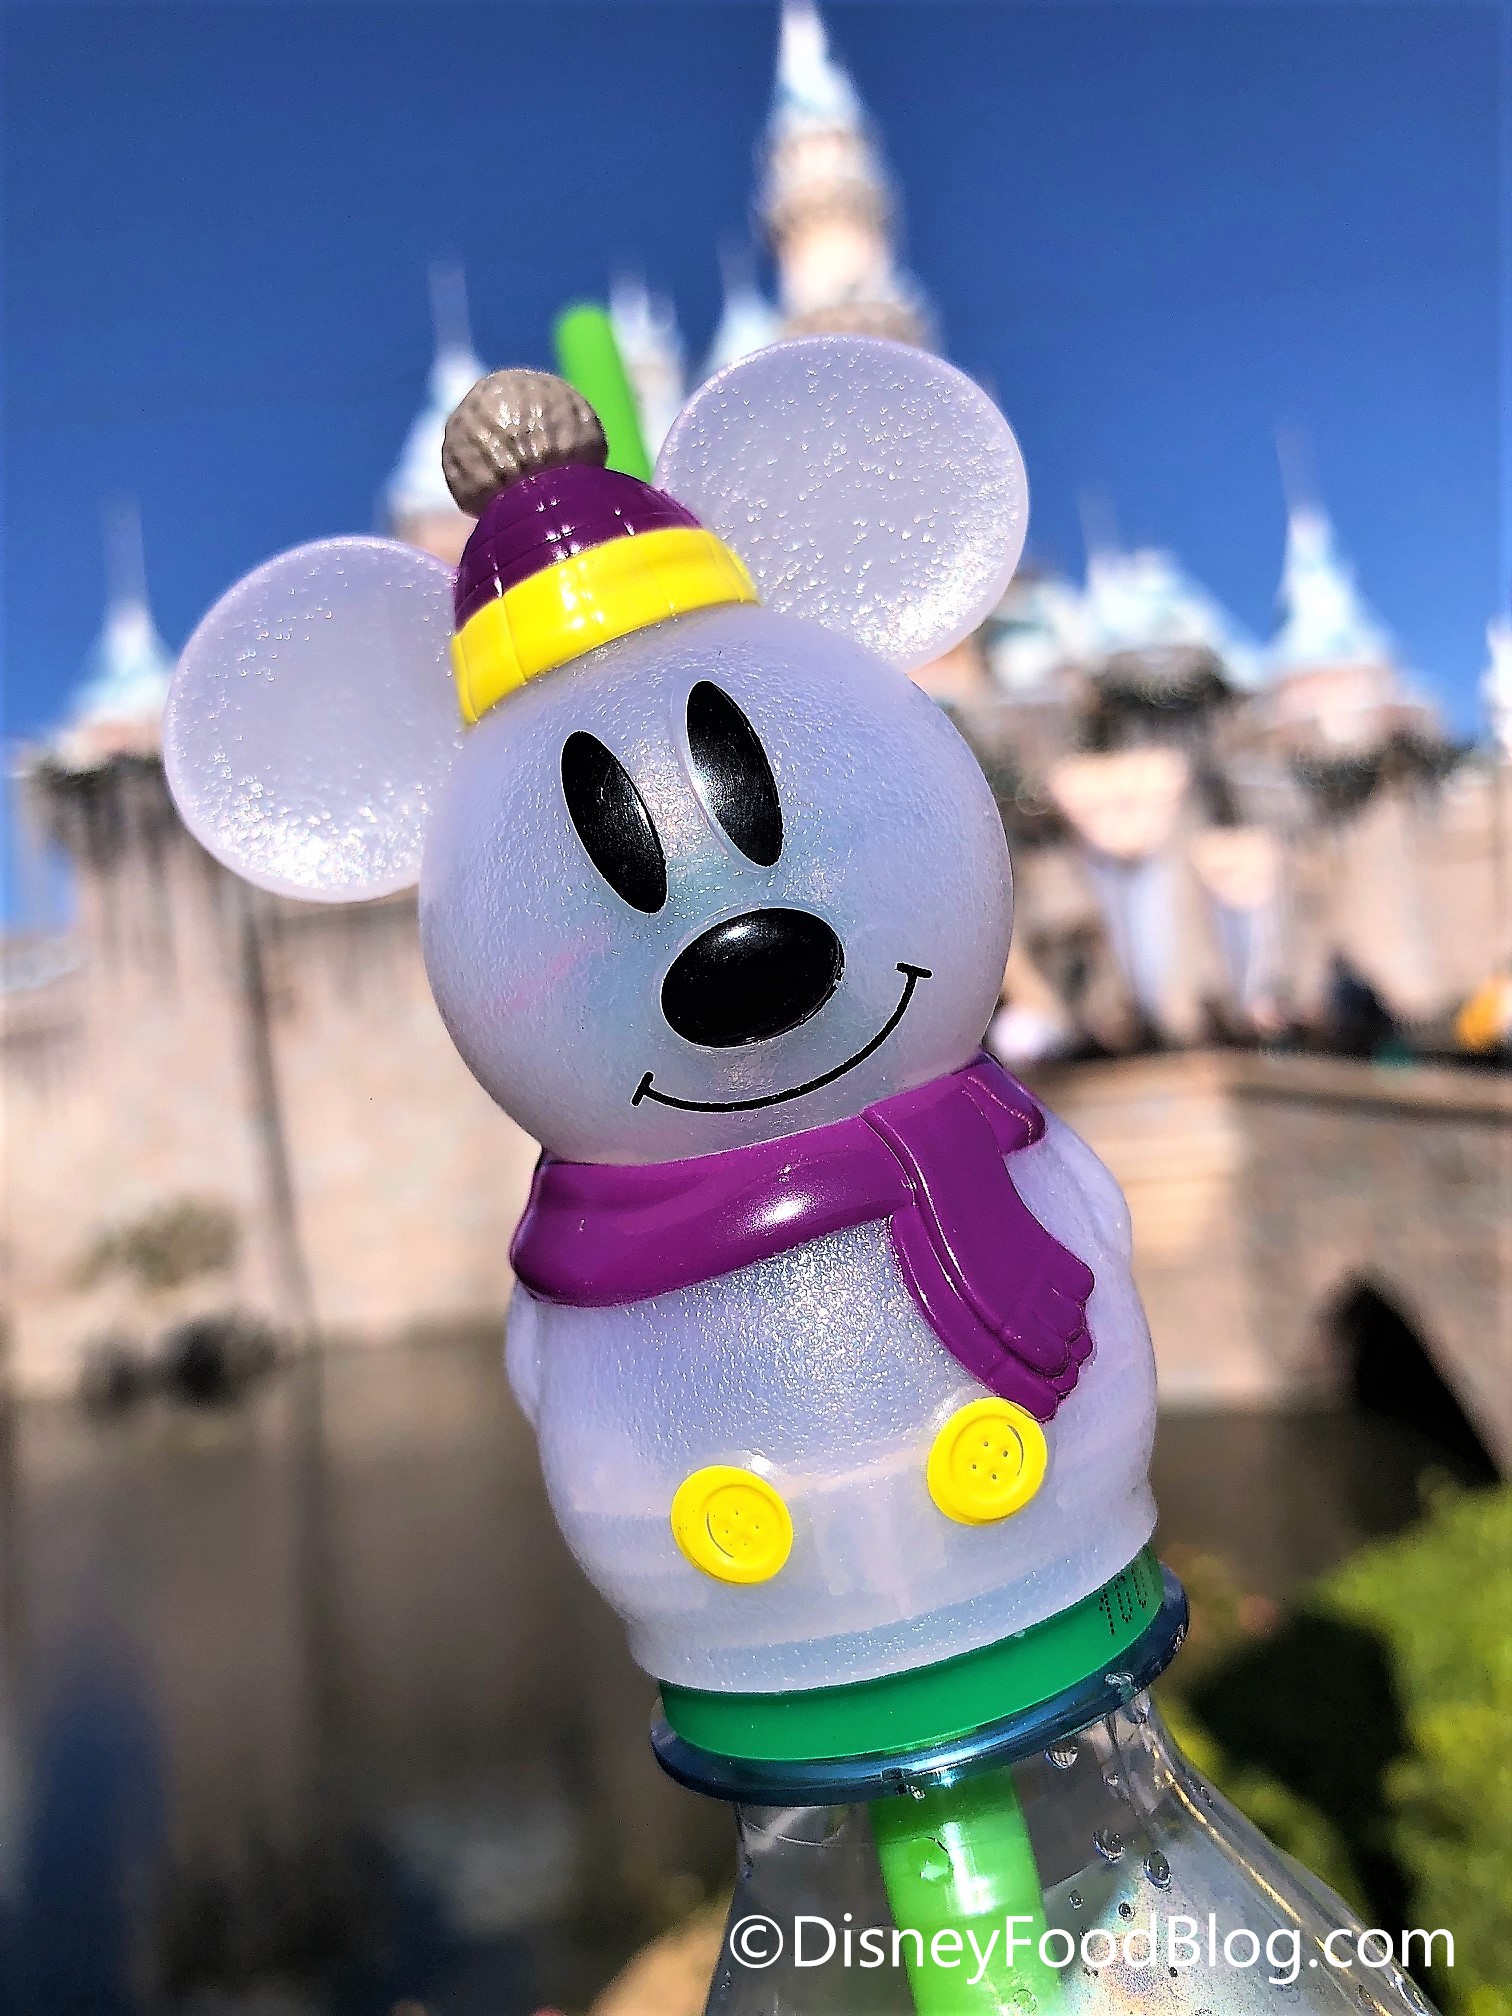 http://www.disneyfoodblog.com/wp-content/uploads/2018/11/Disneyland-Holiday-Mickey-Light-Up-Straw-Castle-1.jpg